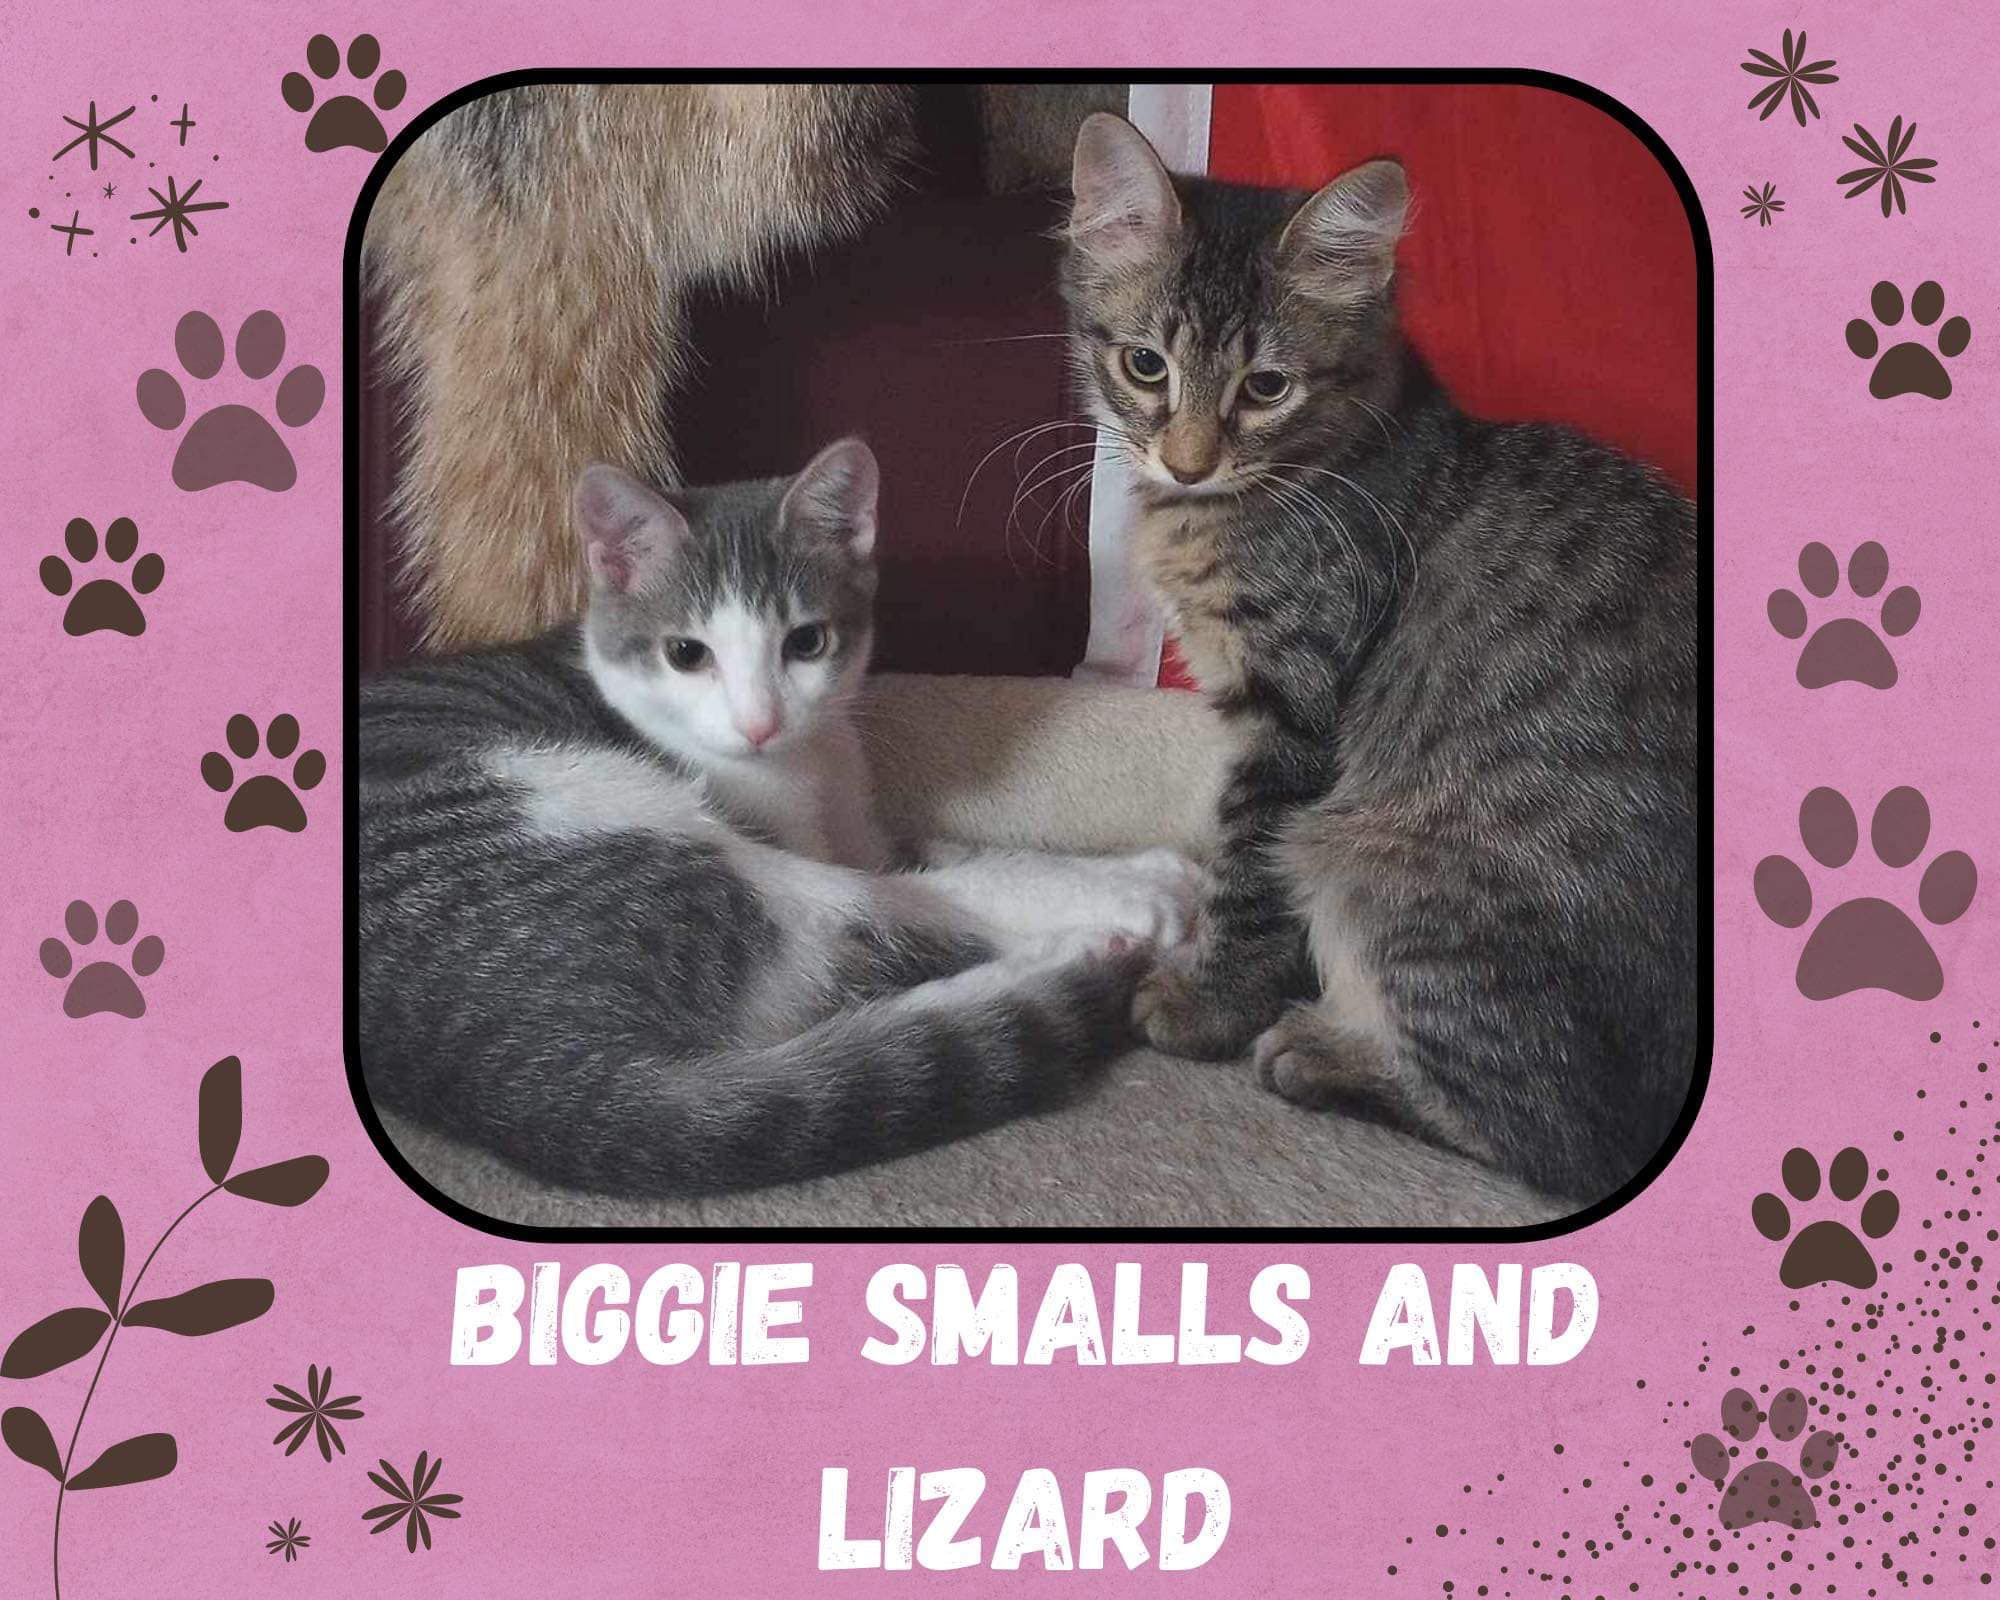 biggie smalls and lizard kittens for adoption